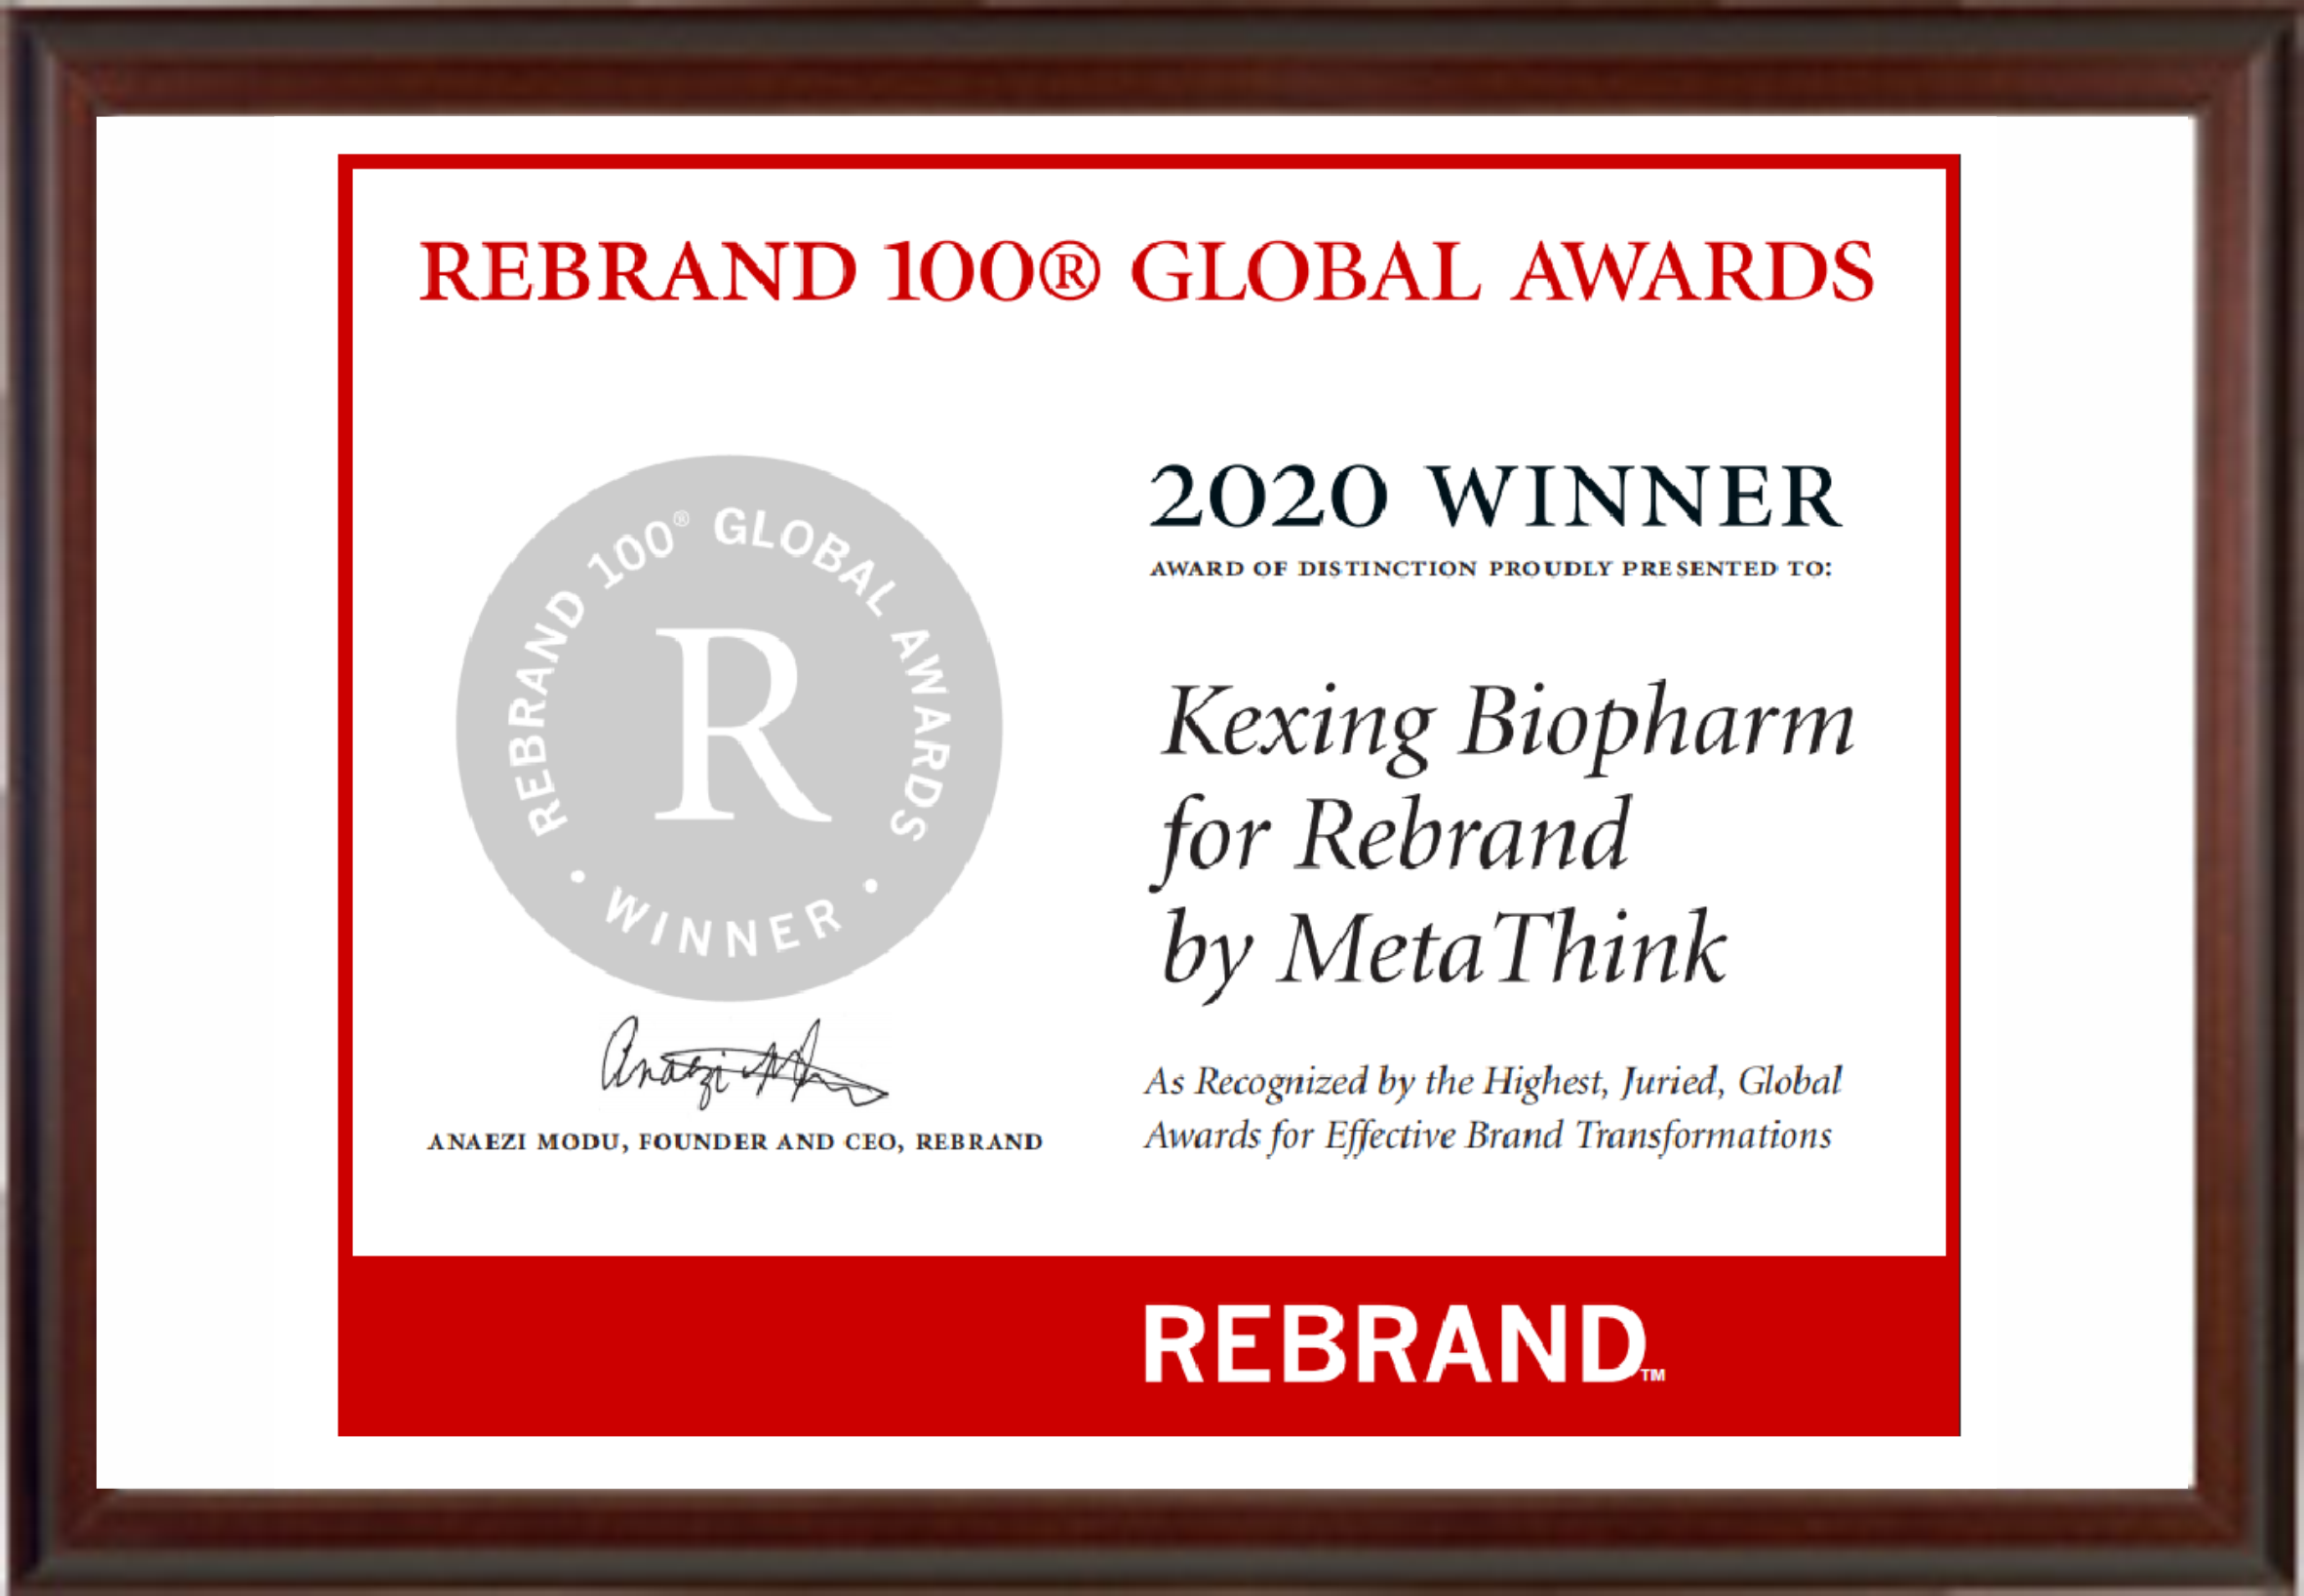 REBRAND 100® GLOBAL AWARDS